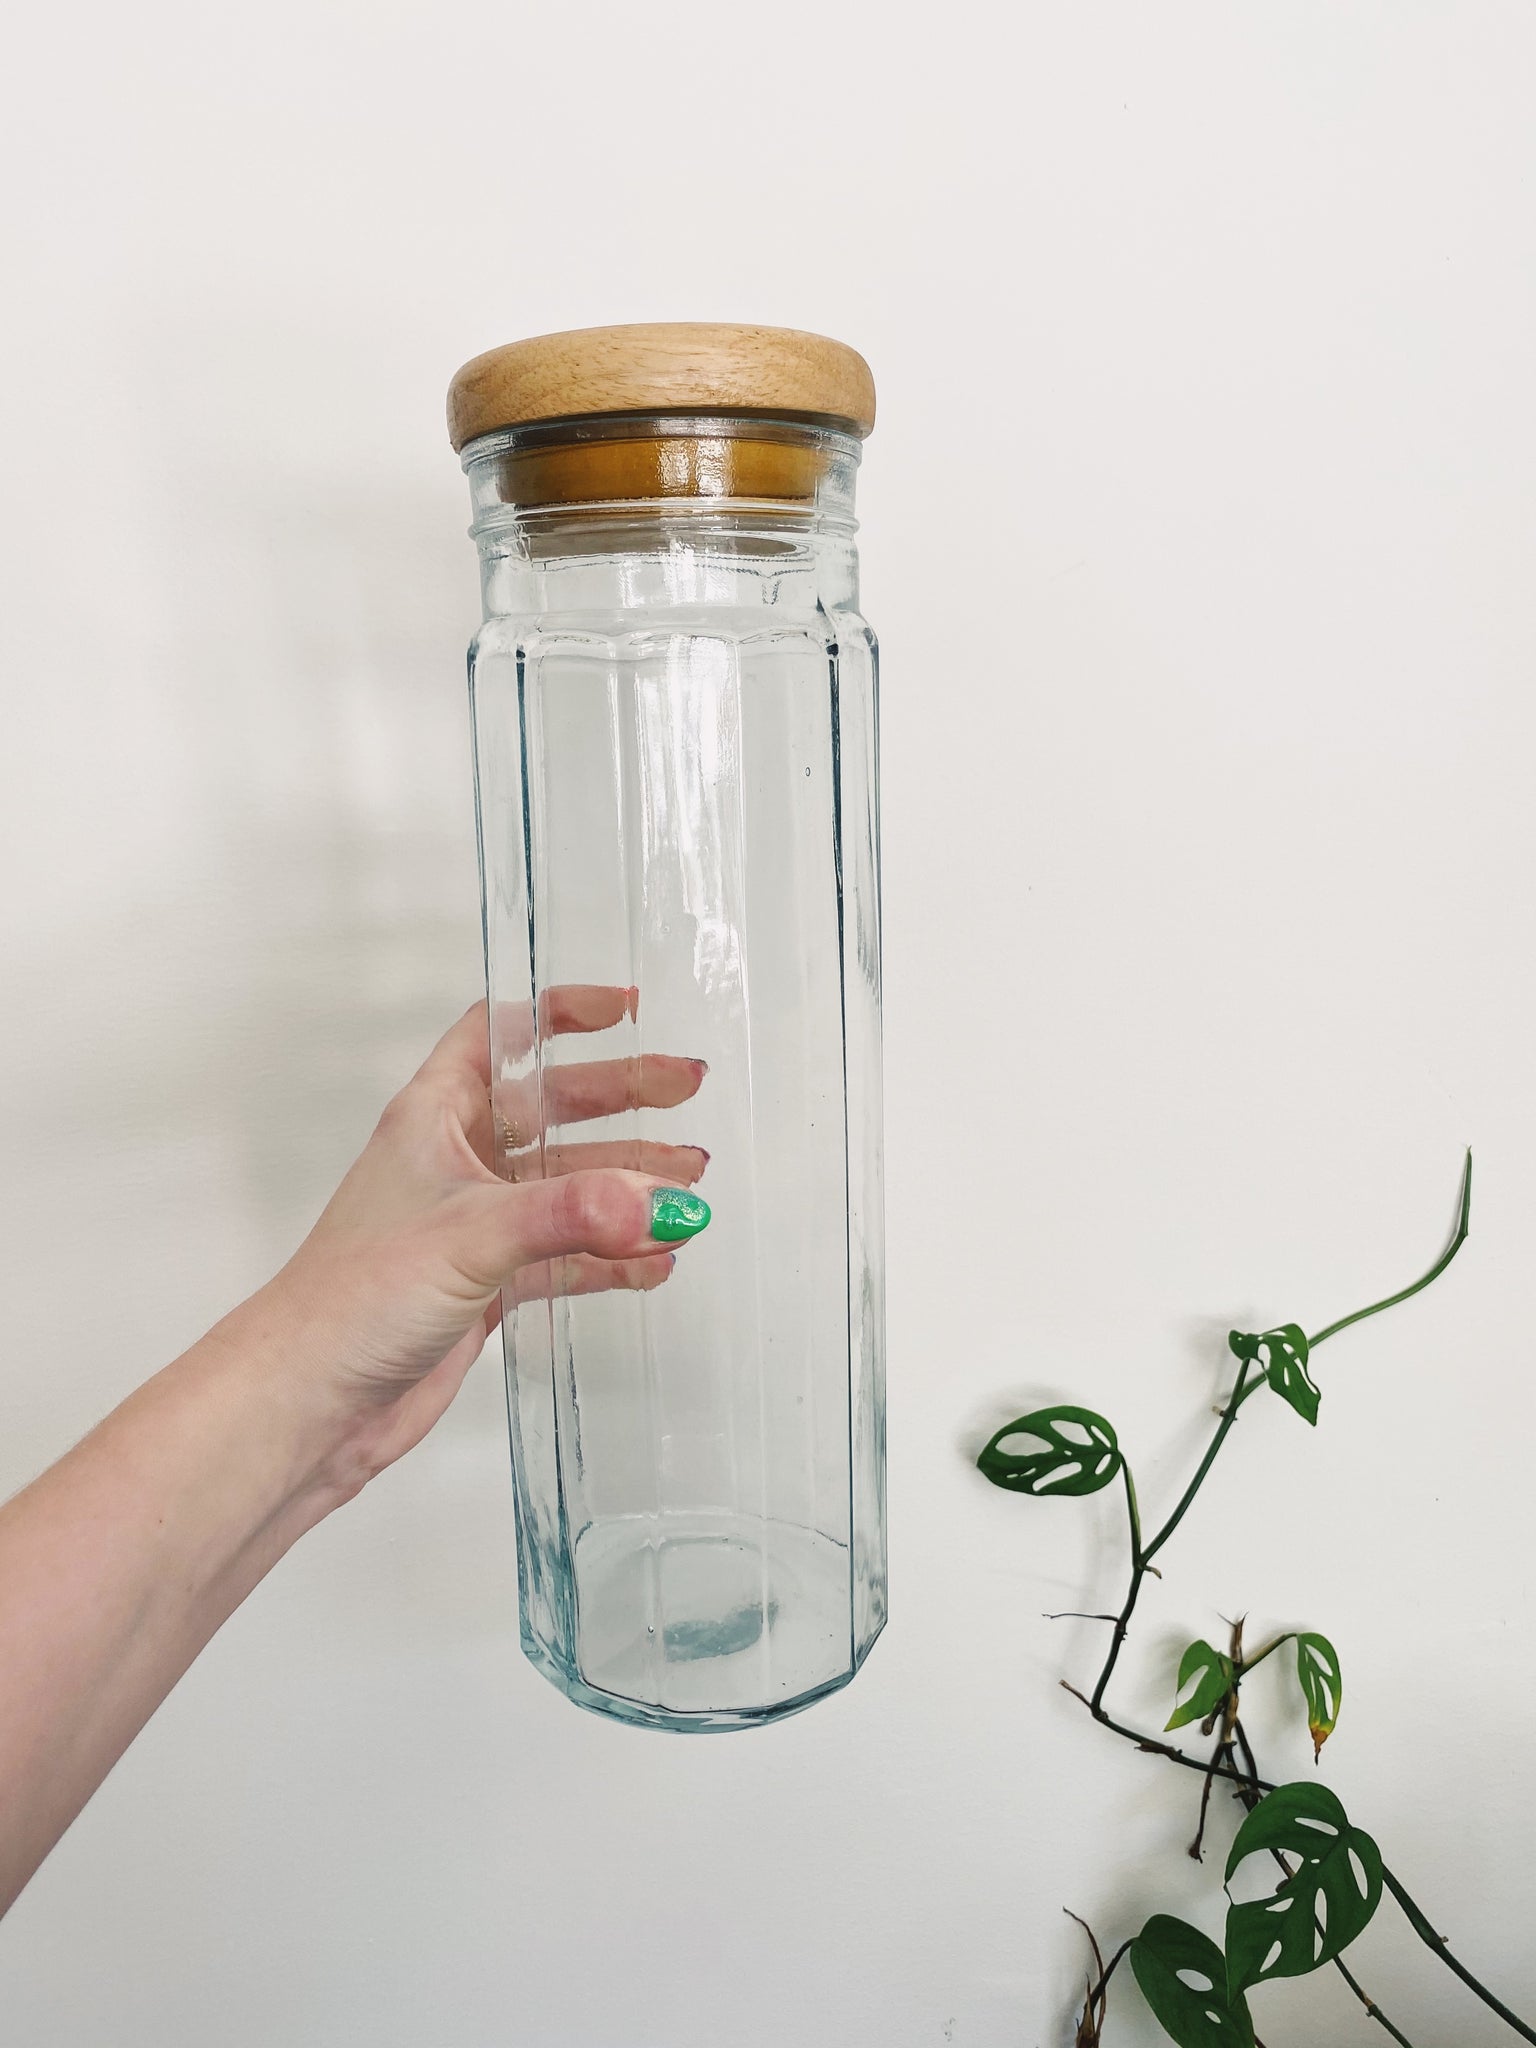 Extra Large Glass Jar